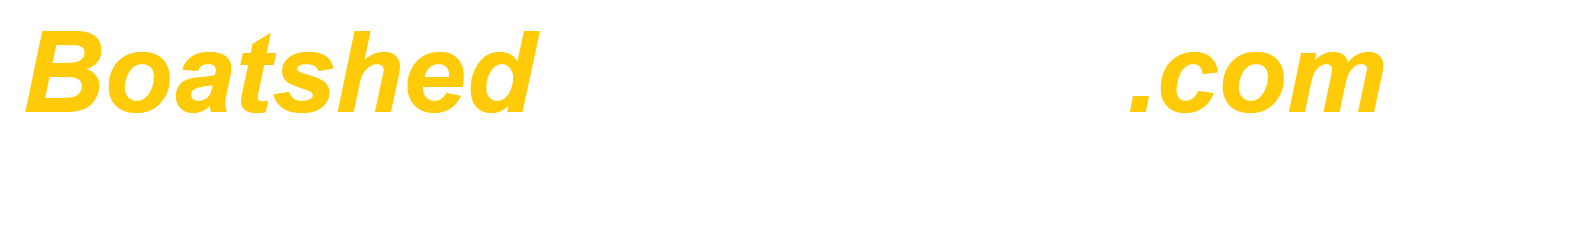 BoatshedMidiCanals.com - International Yacht Brokers